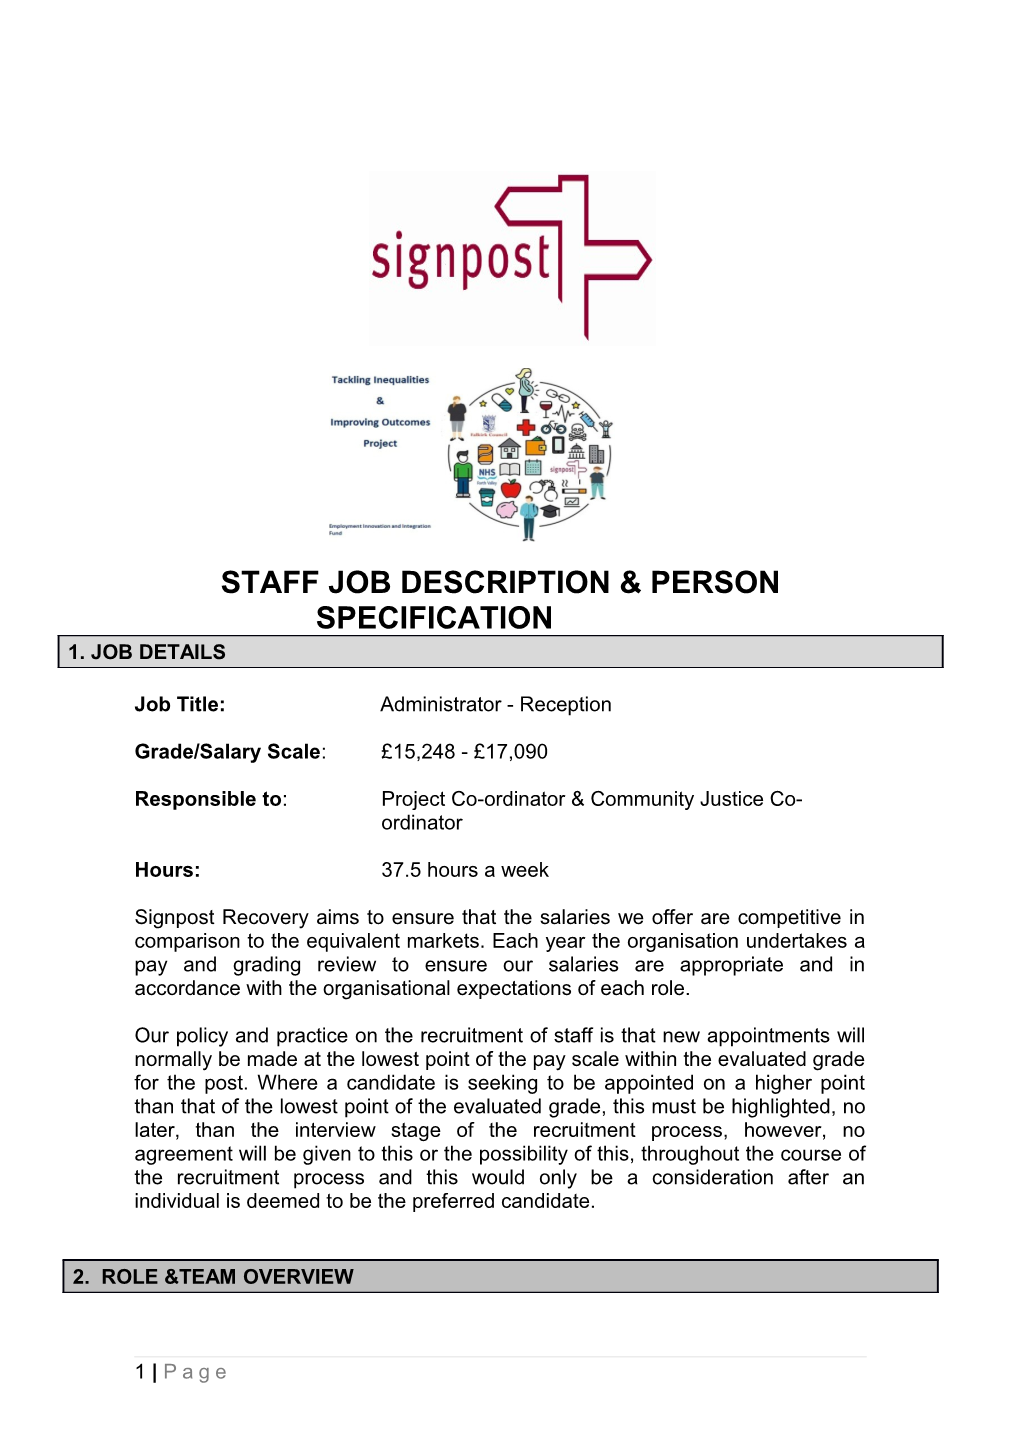 Staff Job Description & Person Specification